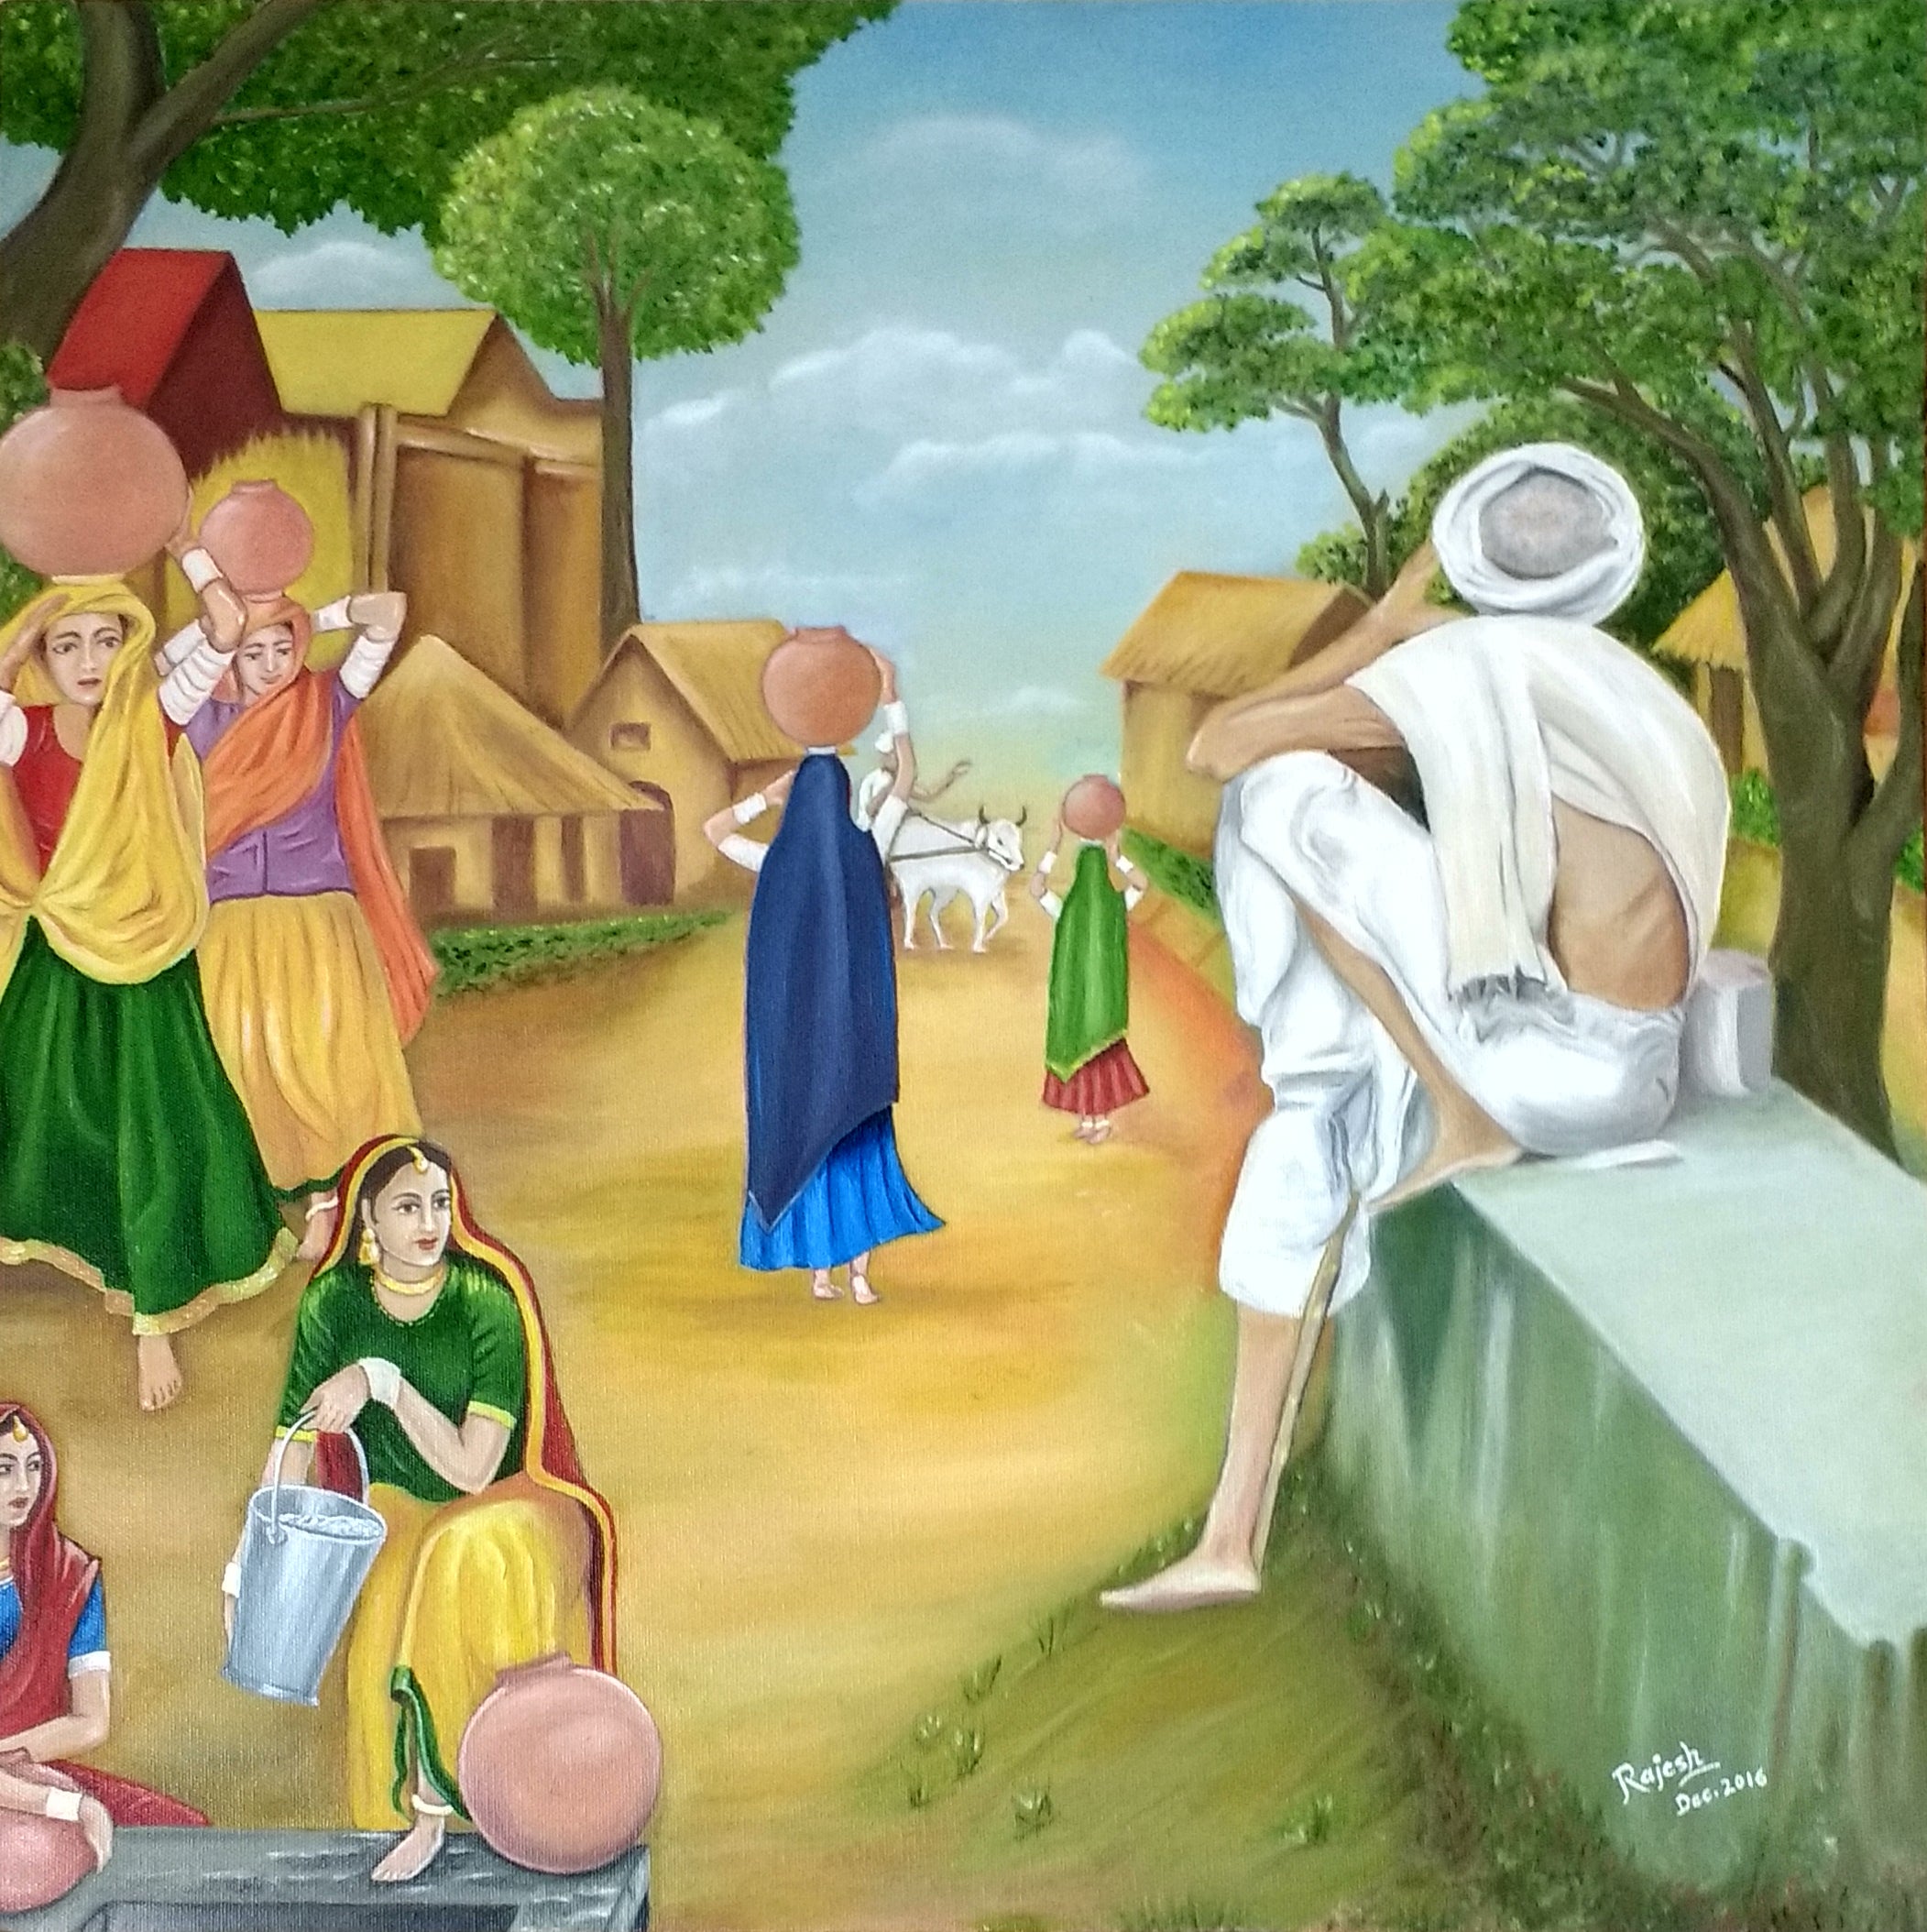 Lord Ram and Jatayu sketch from Shree Ramrasayan